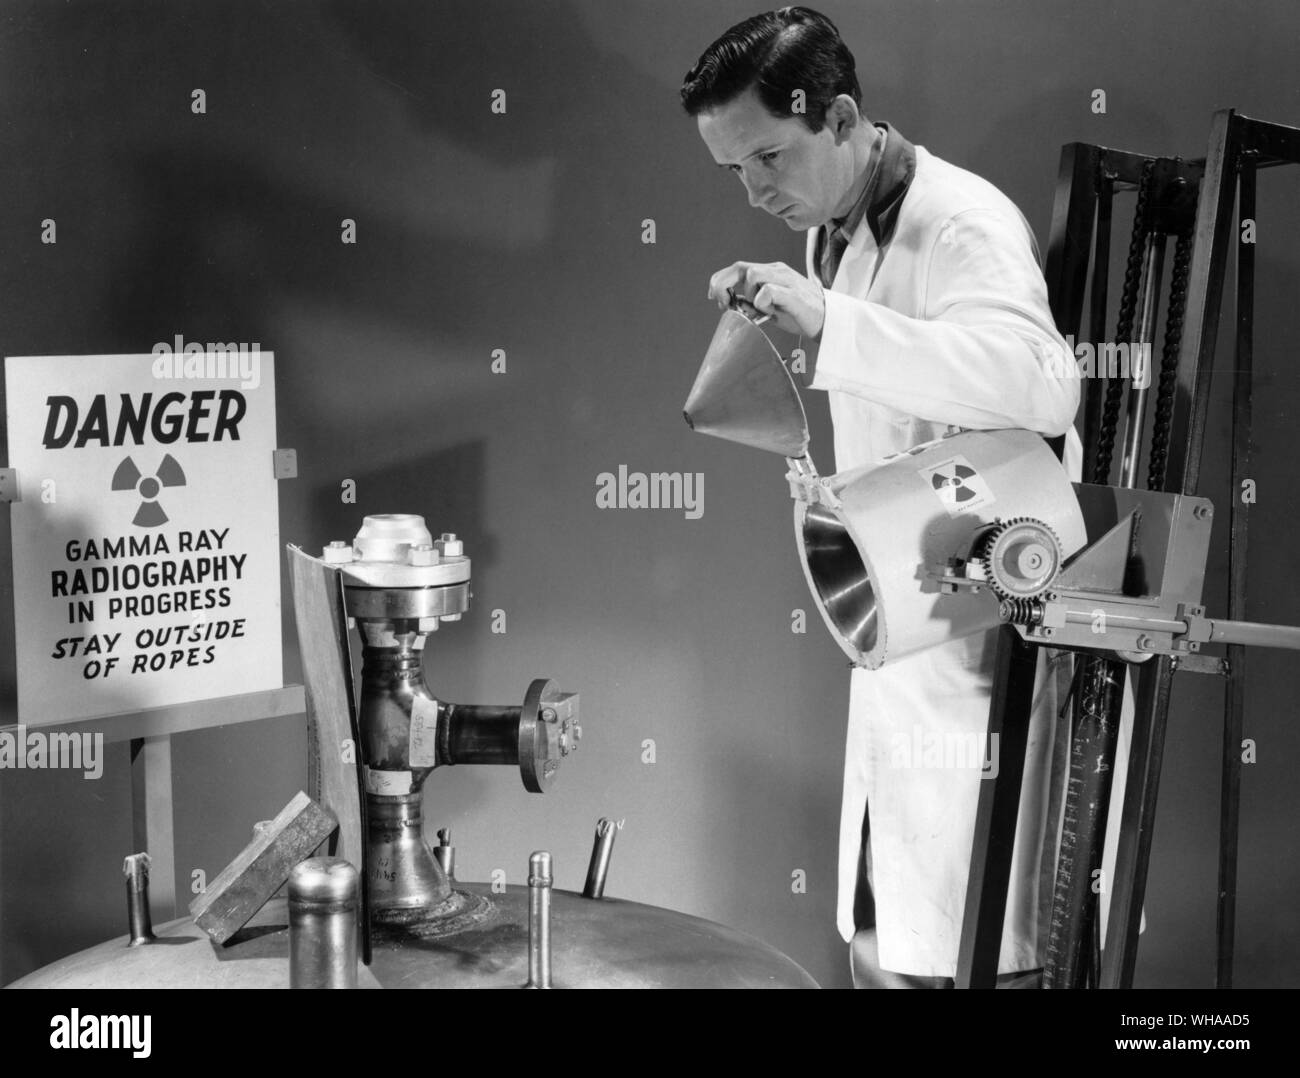 Danger. Gamma Ray Radiography in progress Stock Photo